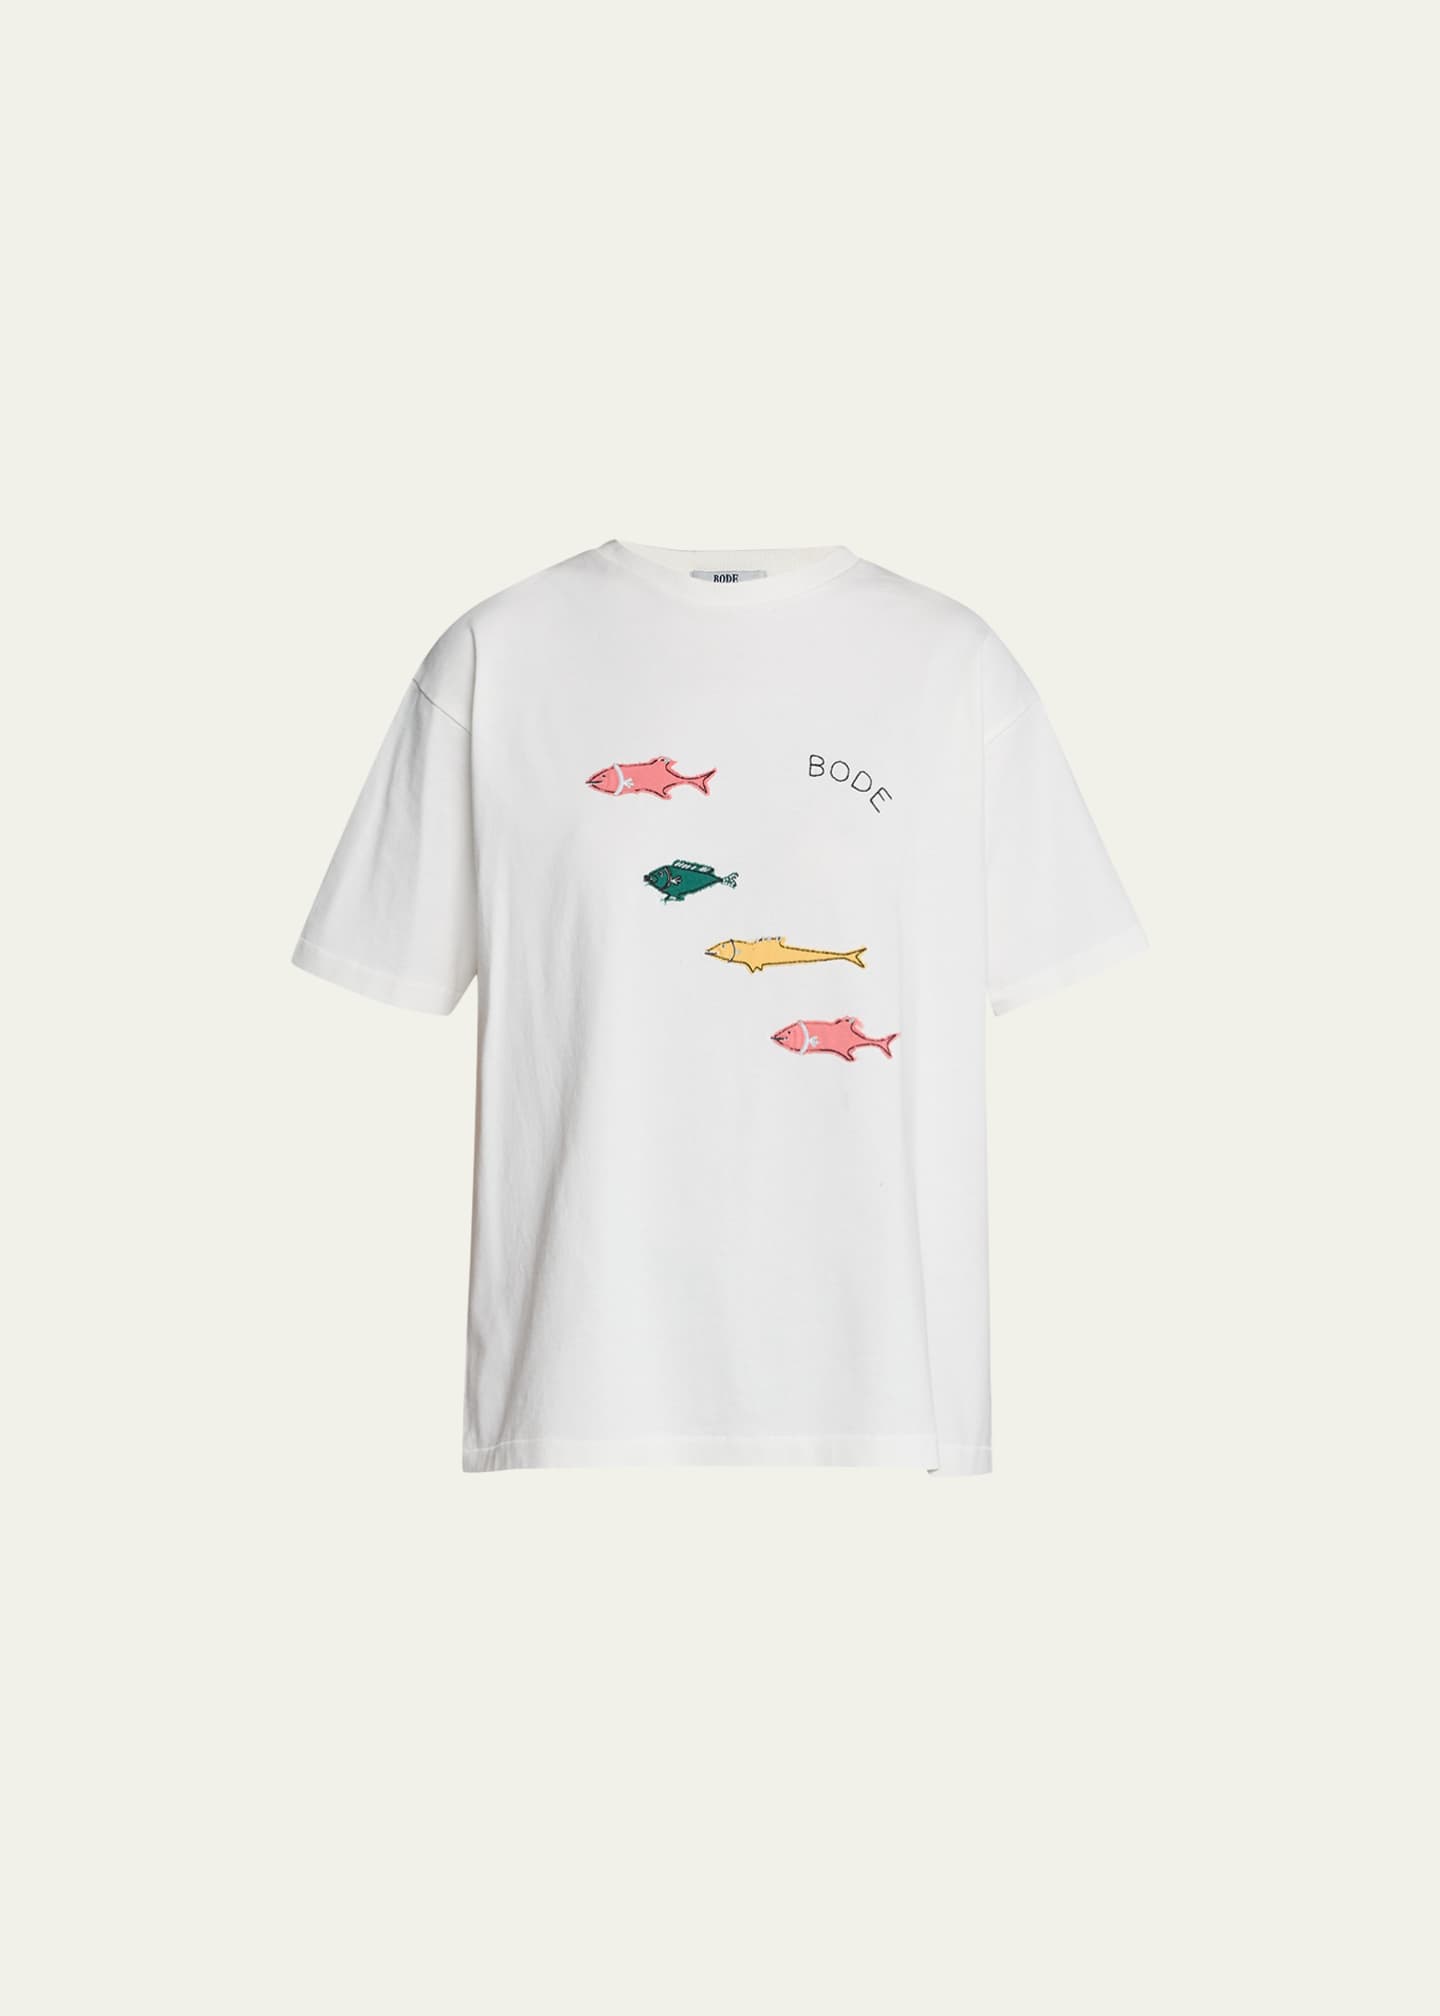 Tropical Fish Fishing Nature HoneVille Adult Unisex T-shirt